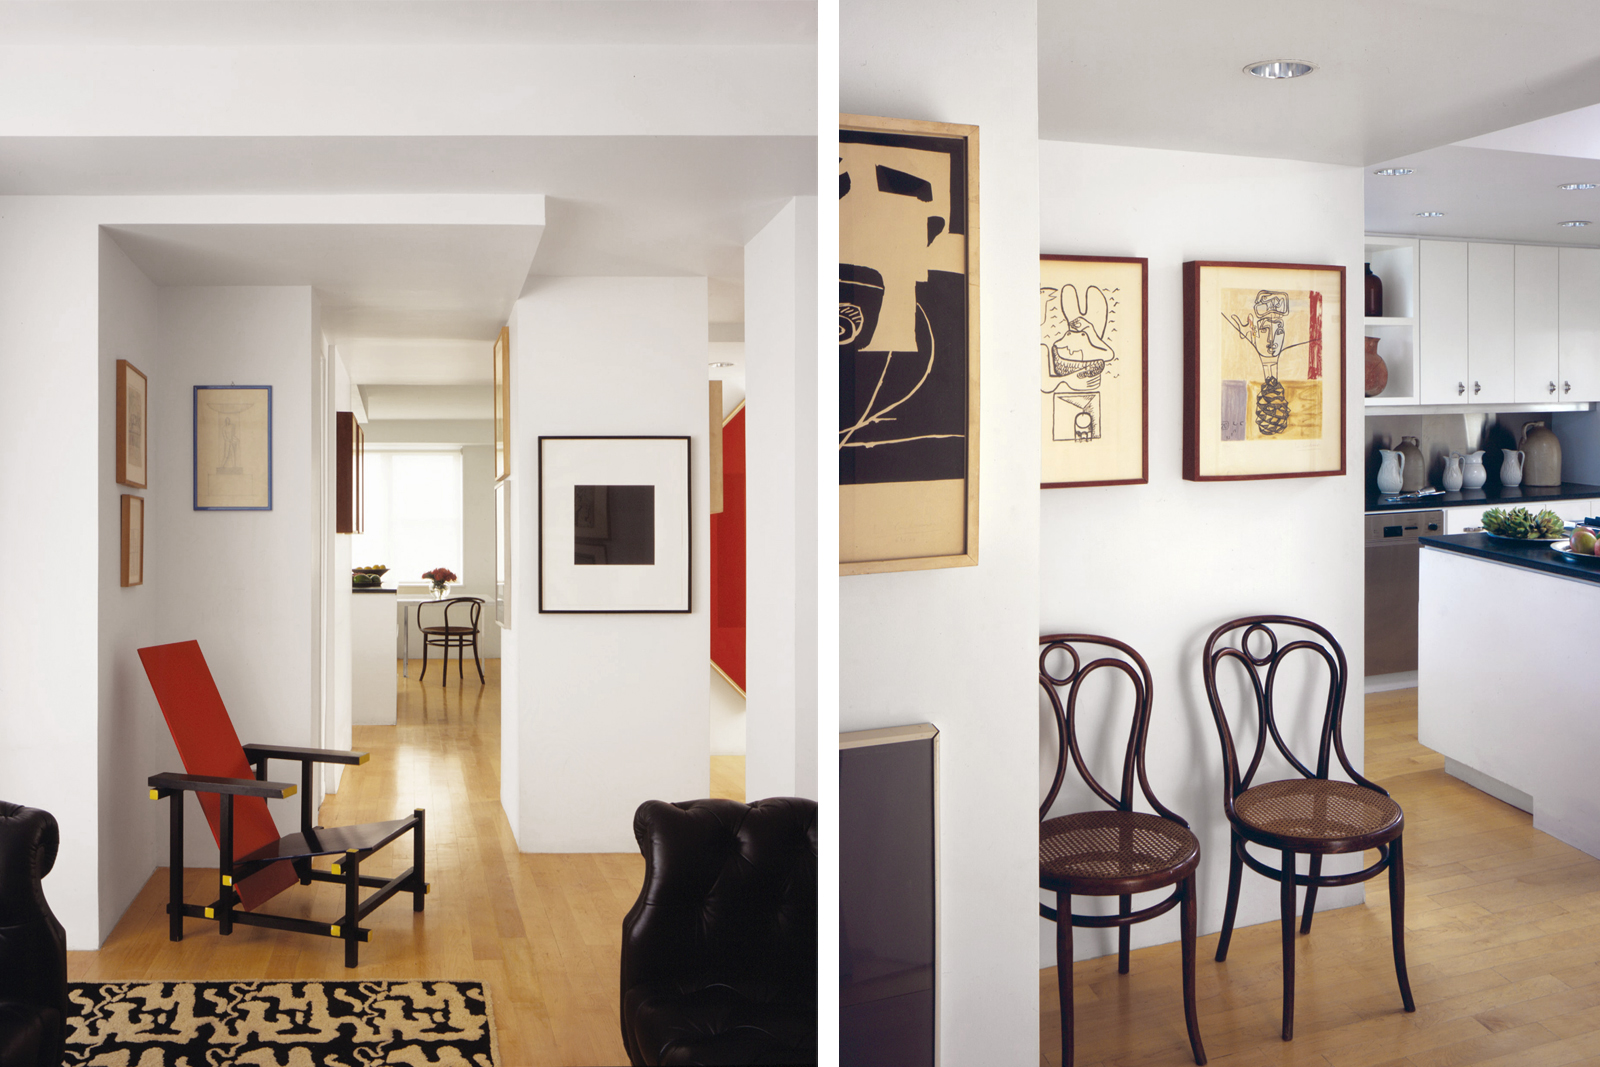 05-res4-resolution-4-architecture-modern-residential-eisenman-davidson-apartment-interior-chairs.jpg